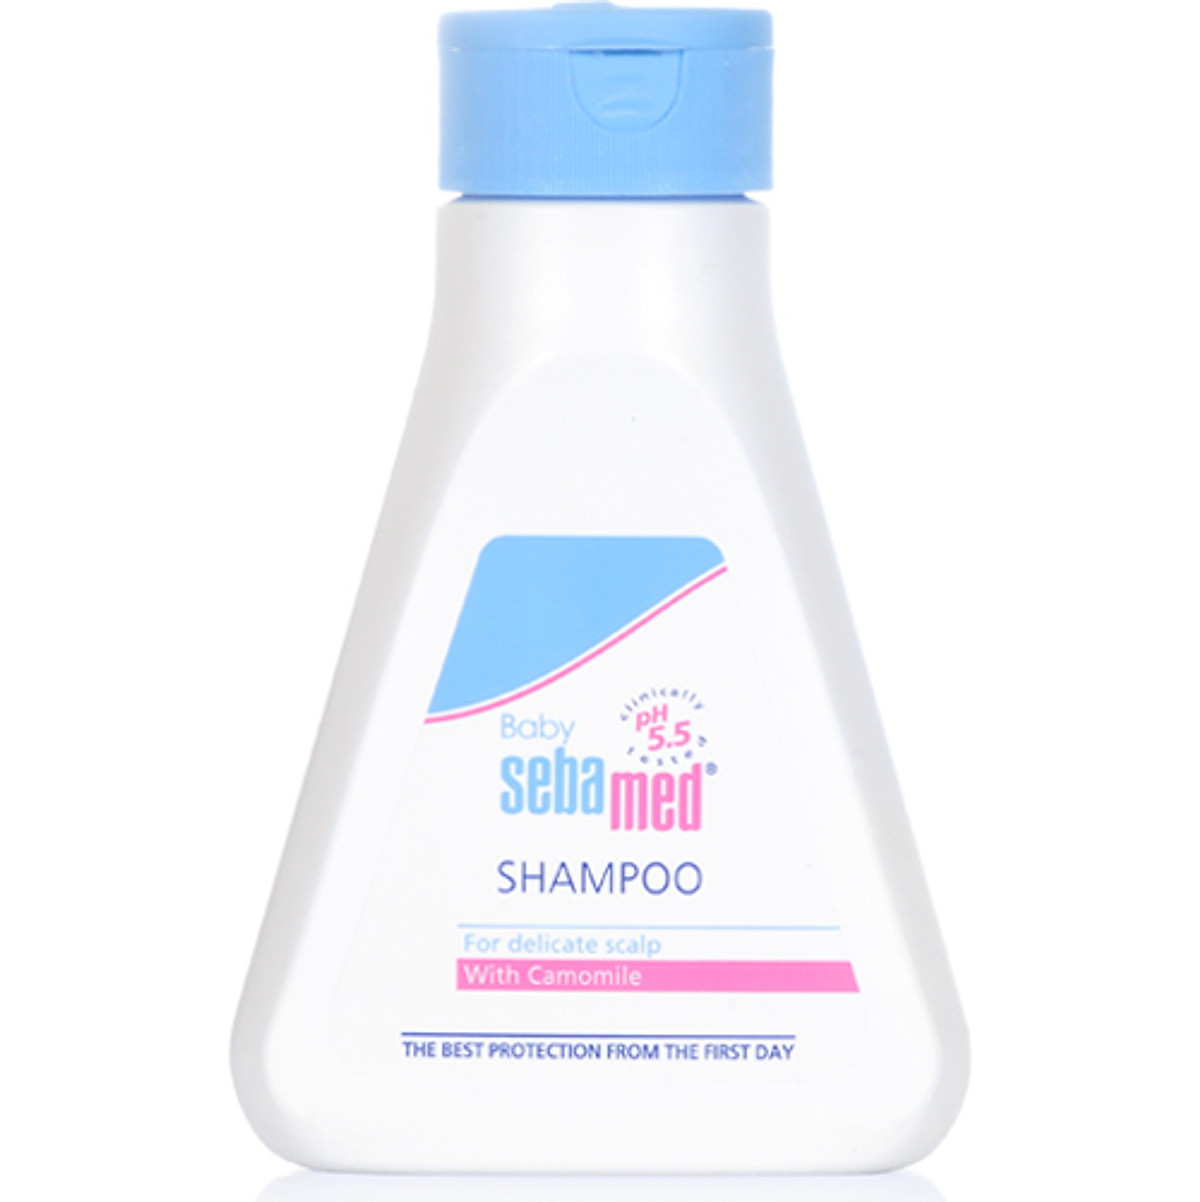 Sebamed's anti-hair loss shampoo ad campaign focuses on scalp health -  StyleSpeak